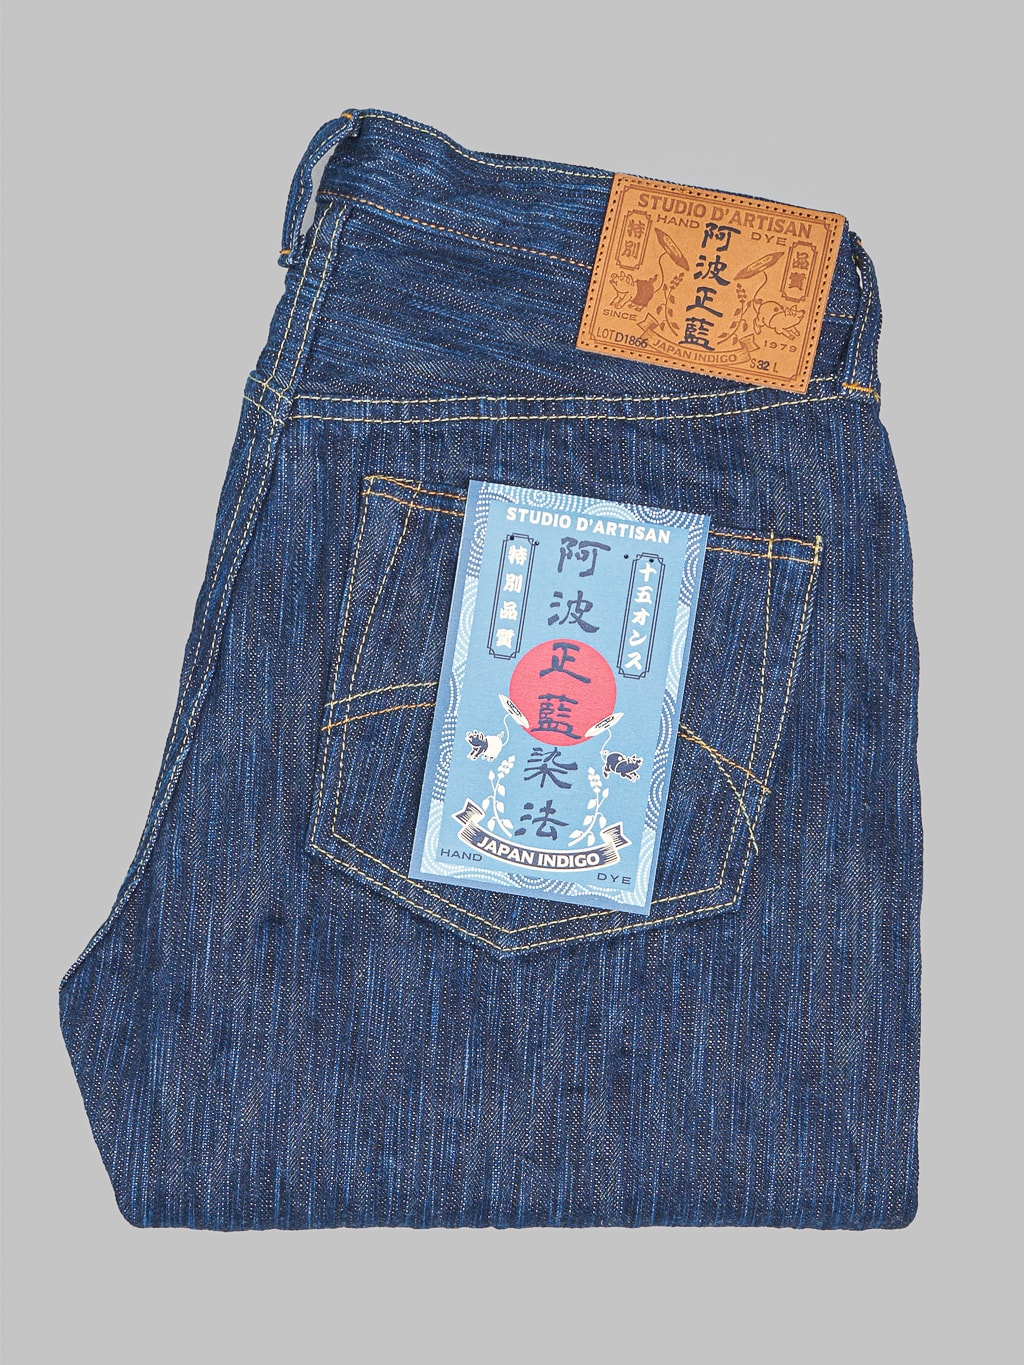 Studio dartisan tokushima awa shoai regular straight jeans front view